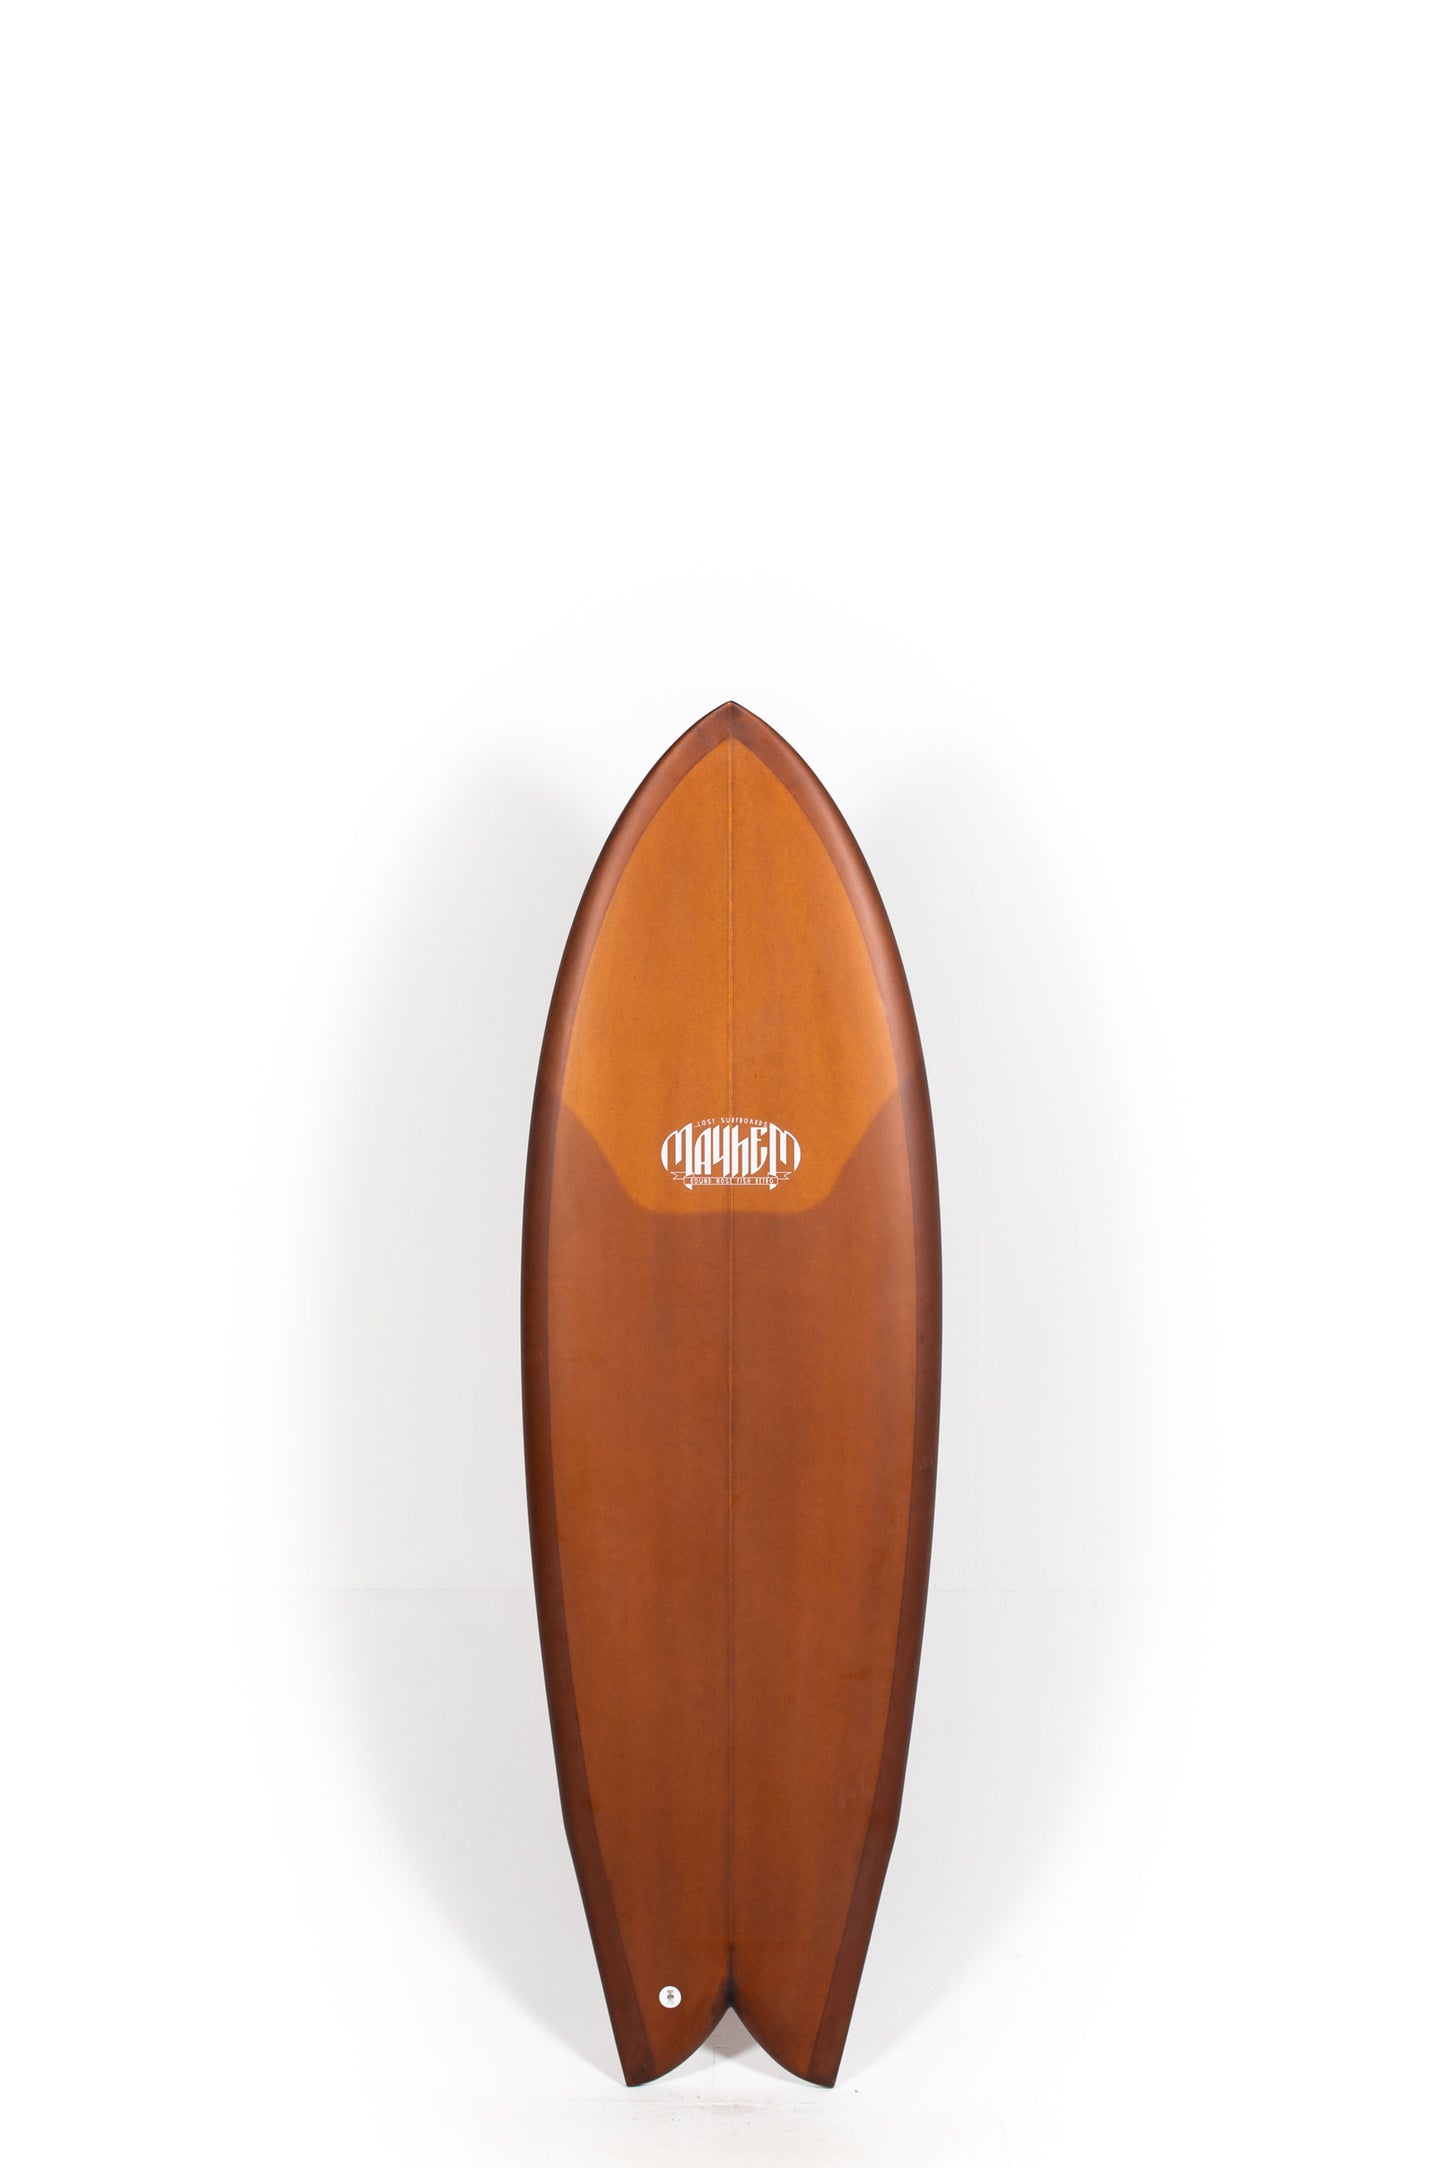 Pukas Surf Shop - Lost Surfboard - RNF RETRO'23 REVAMP by Mayhem - 5’10” x 21.5" x 2.52" - 37L - MH17233